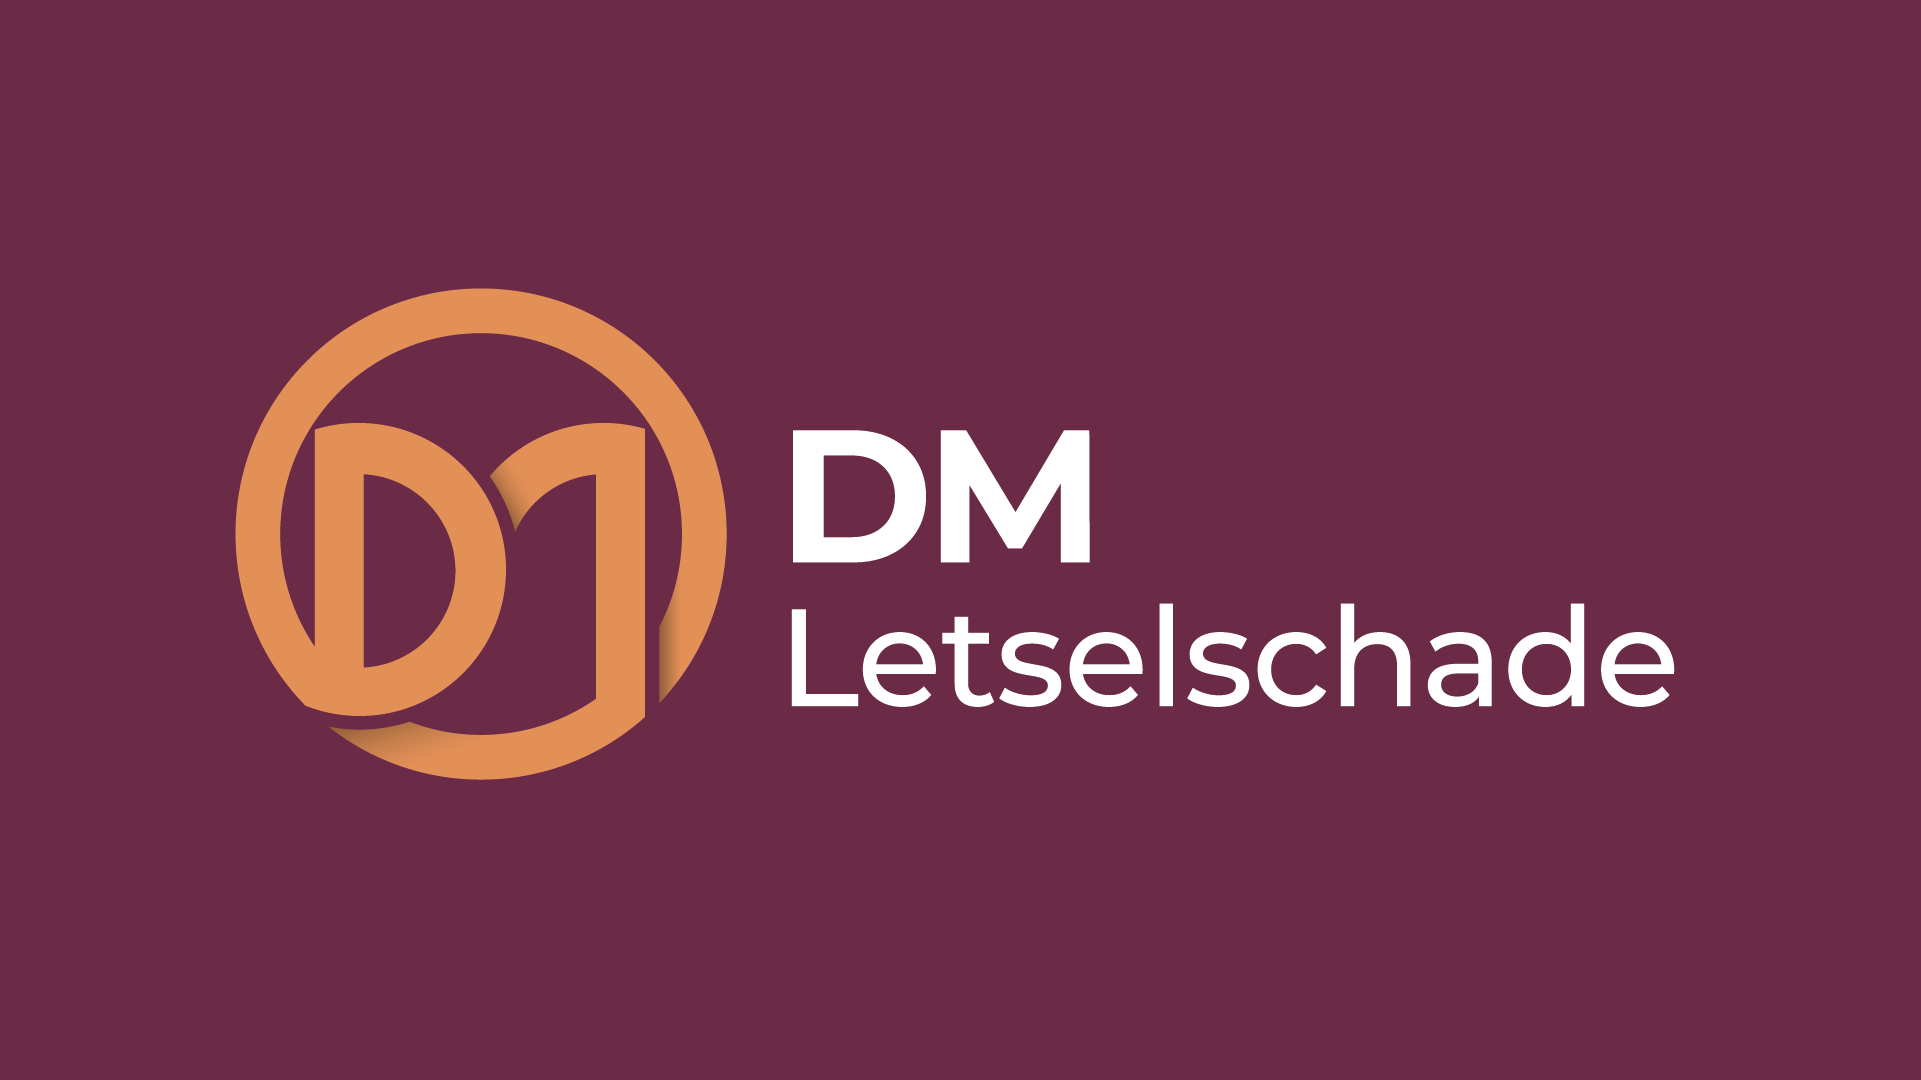 DM Letselschade logo 8